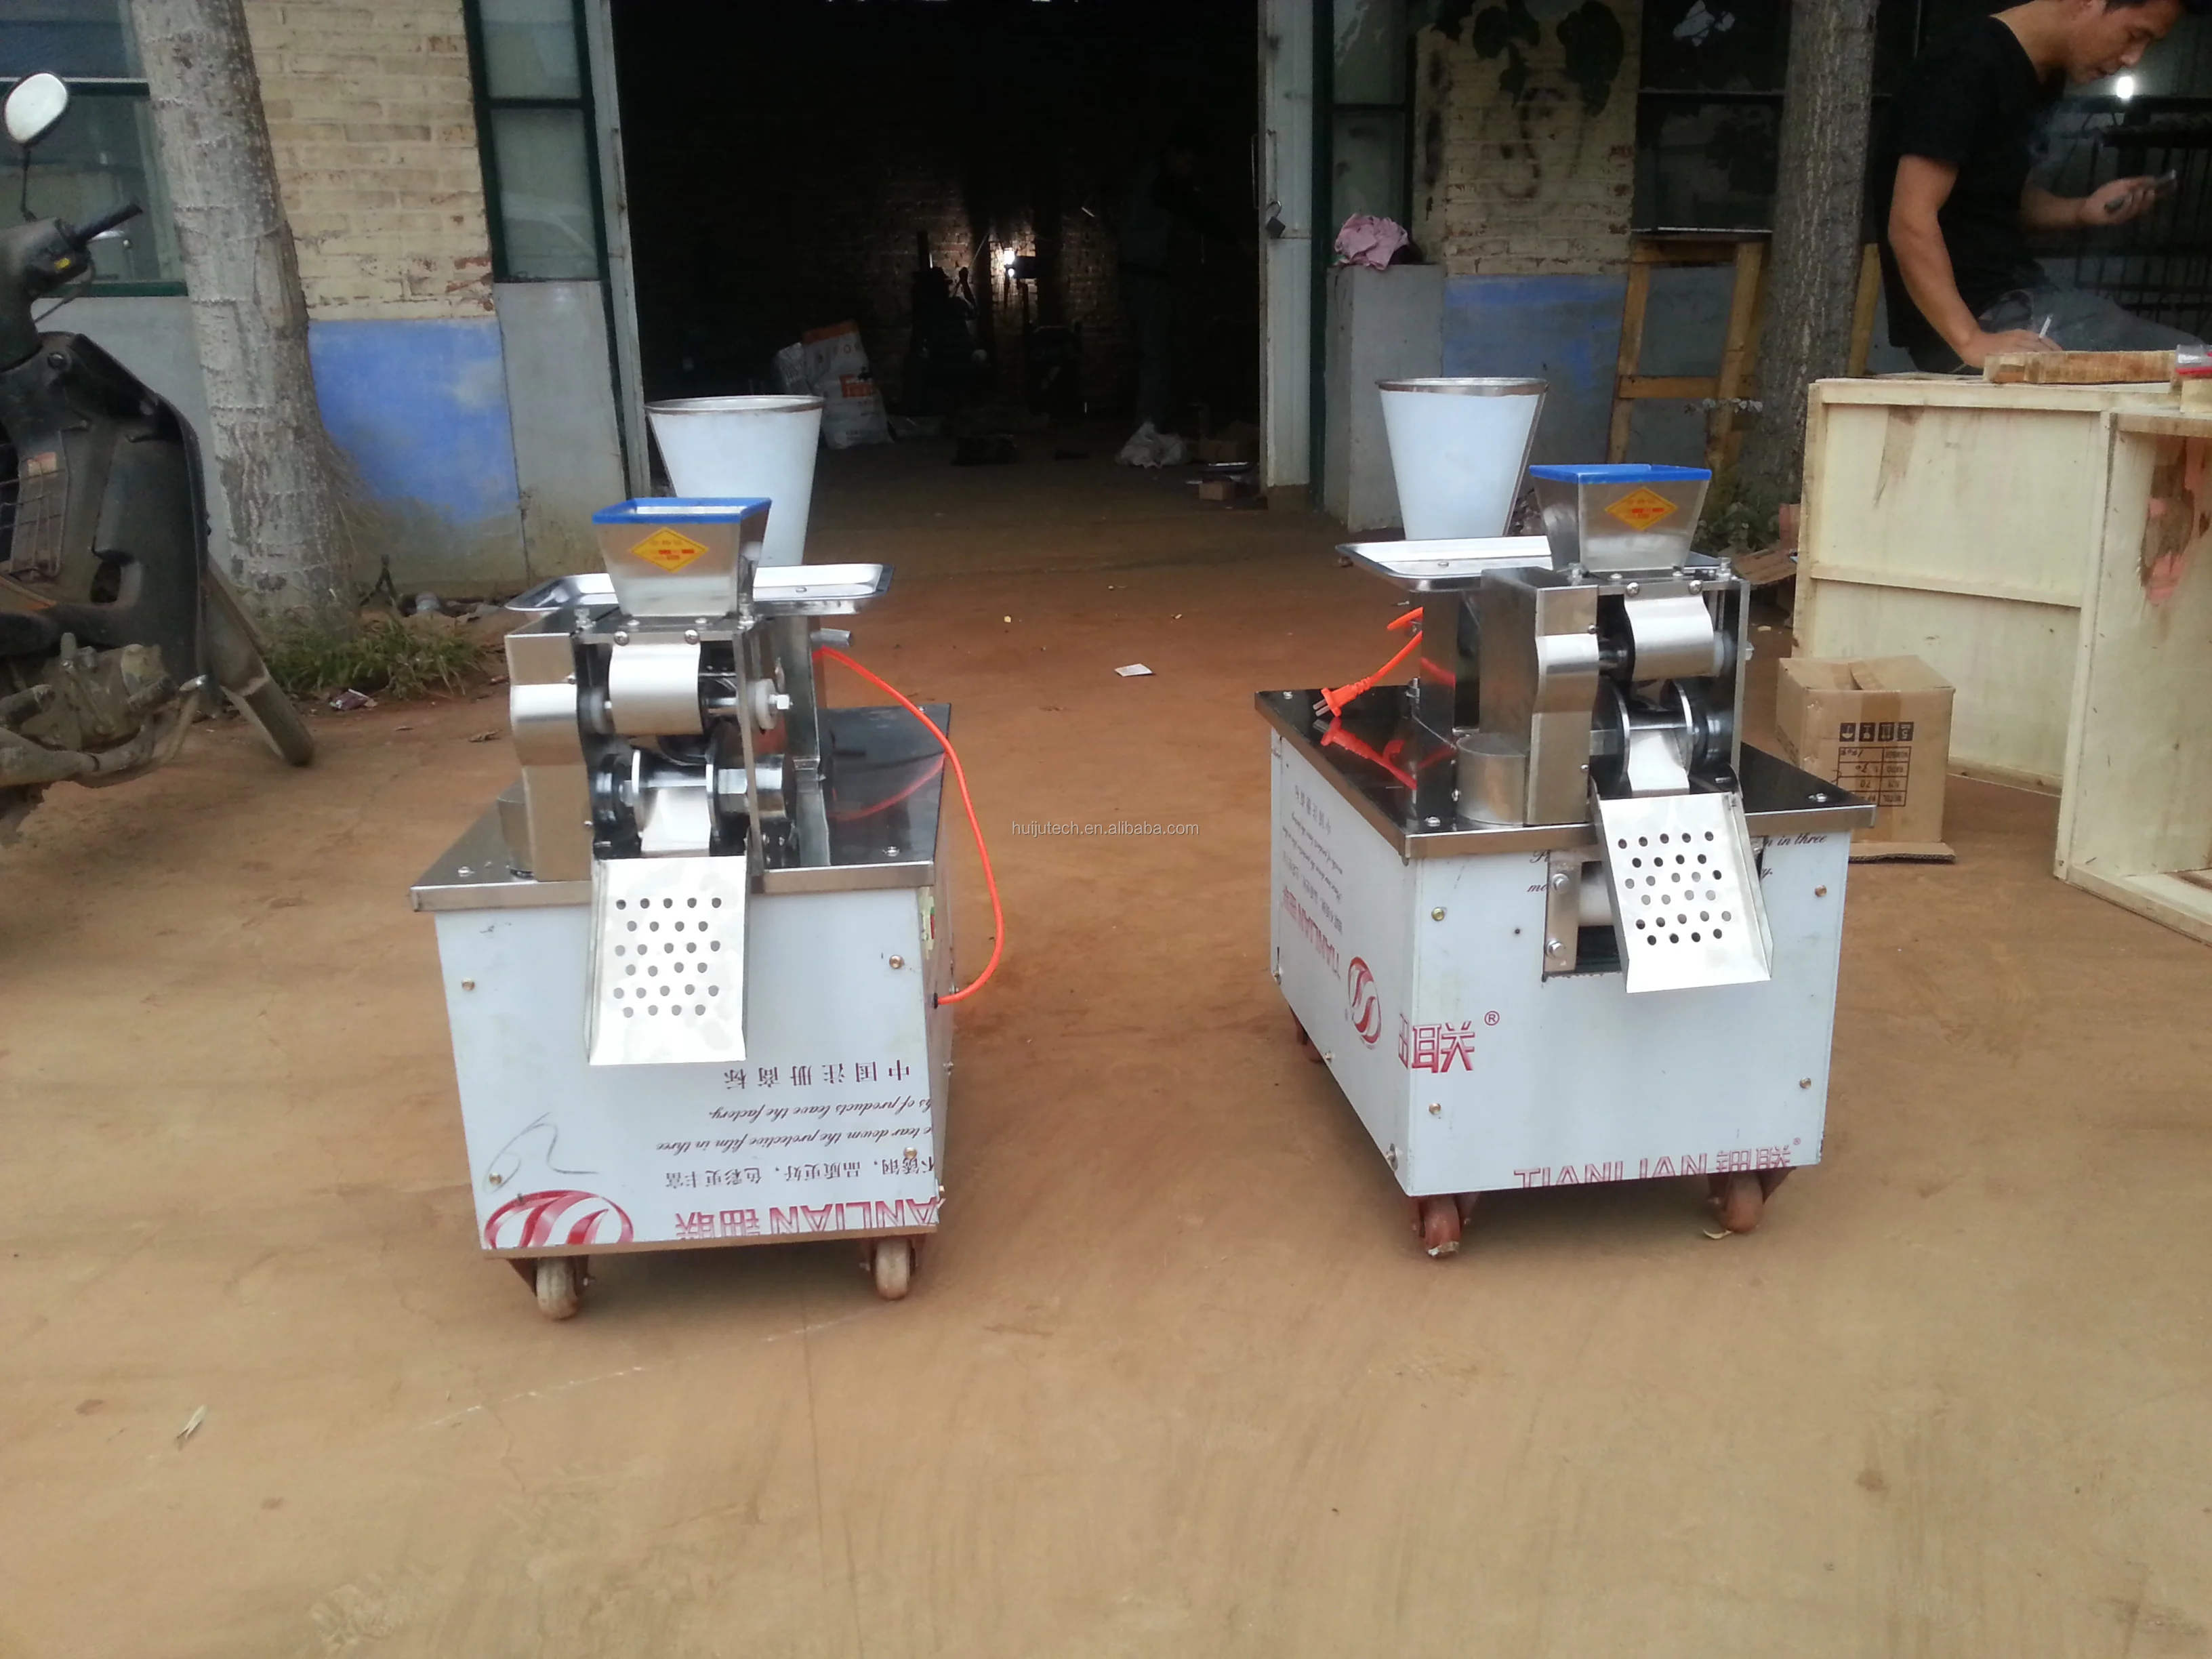 Máquina automática para hacer dumplings, máquina para hacer dumplings, empanada, China